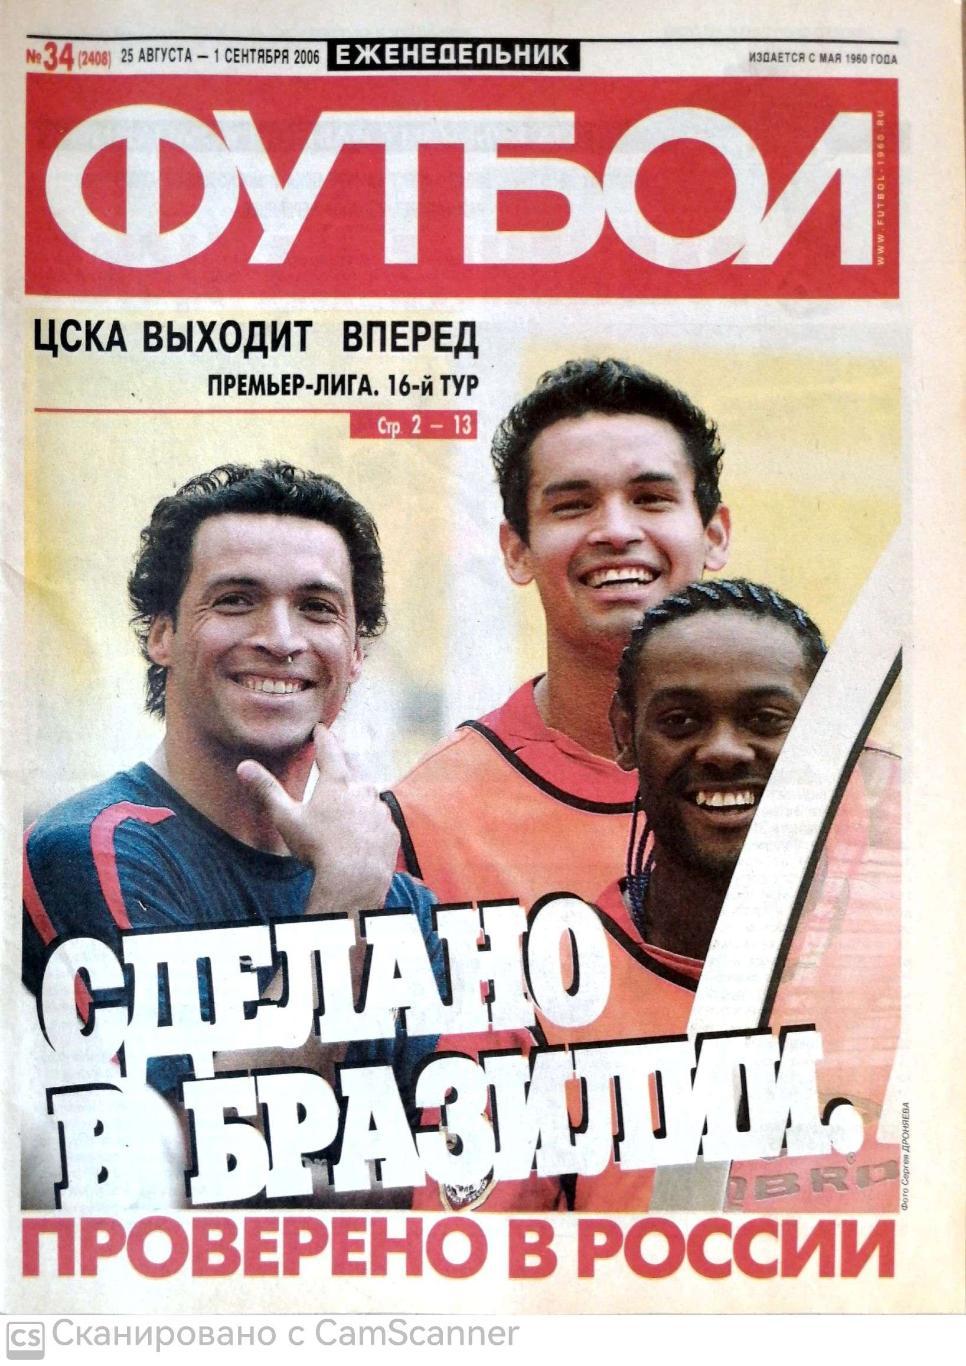 Еженедельник «Футбол» (Москва). 2006 год. №34